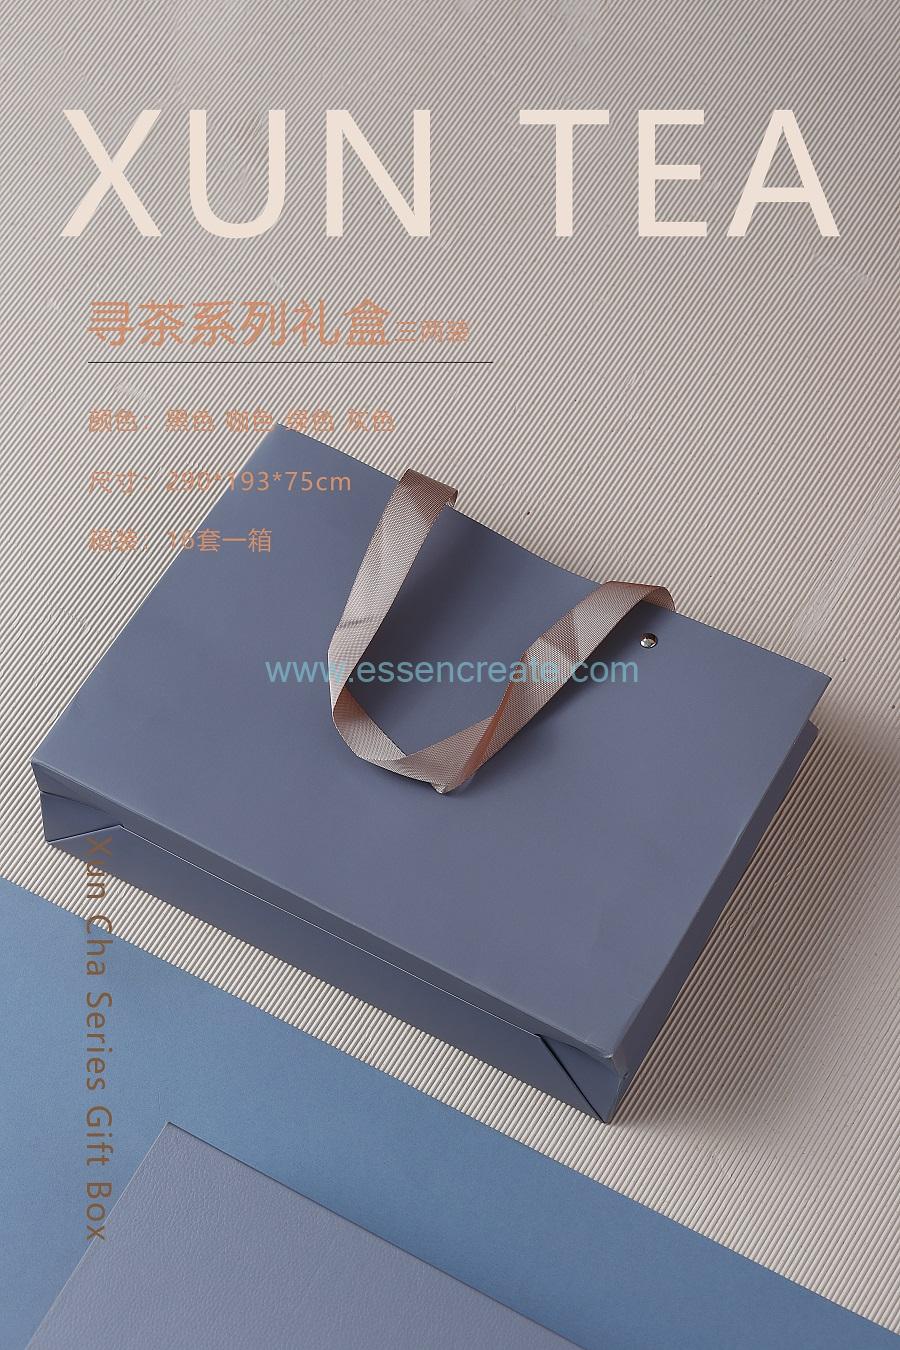 acrylic box with leather wrap box